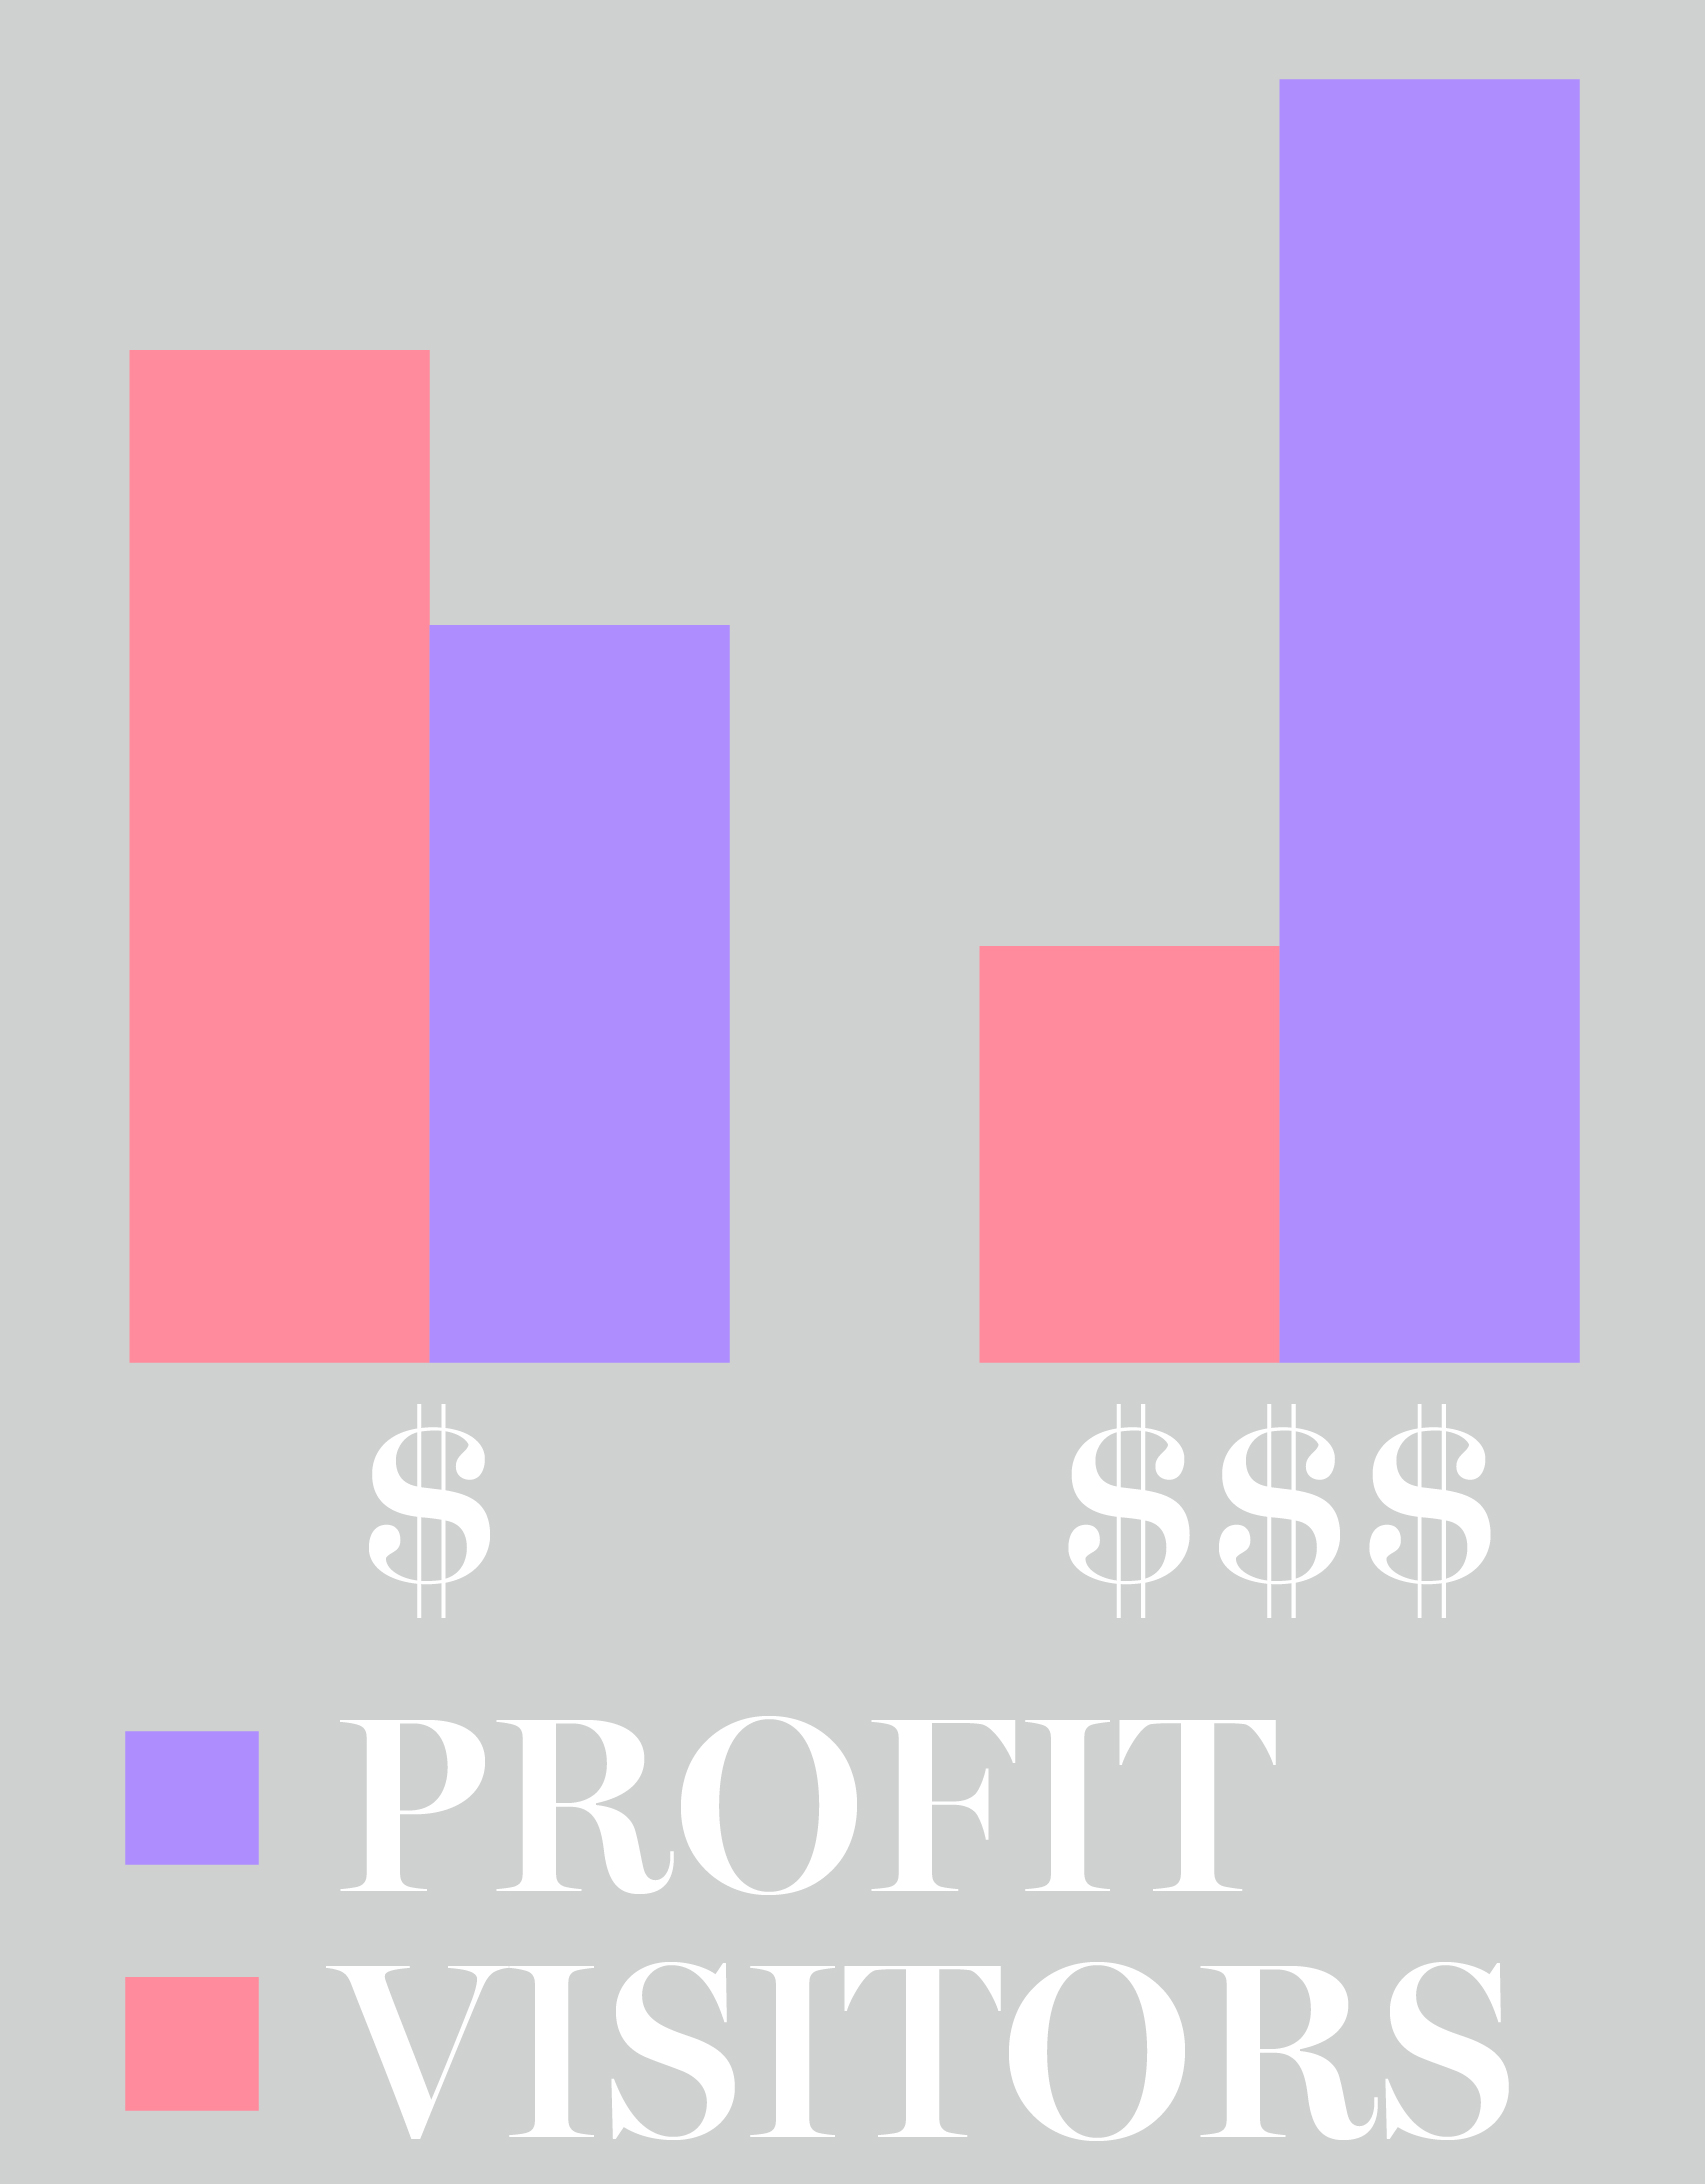 Less Clients but Better Services equals value #pricing #profit #roi